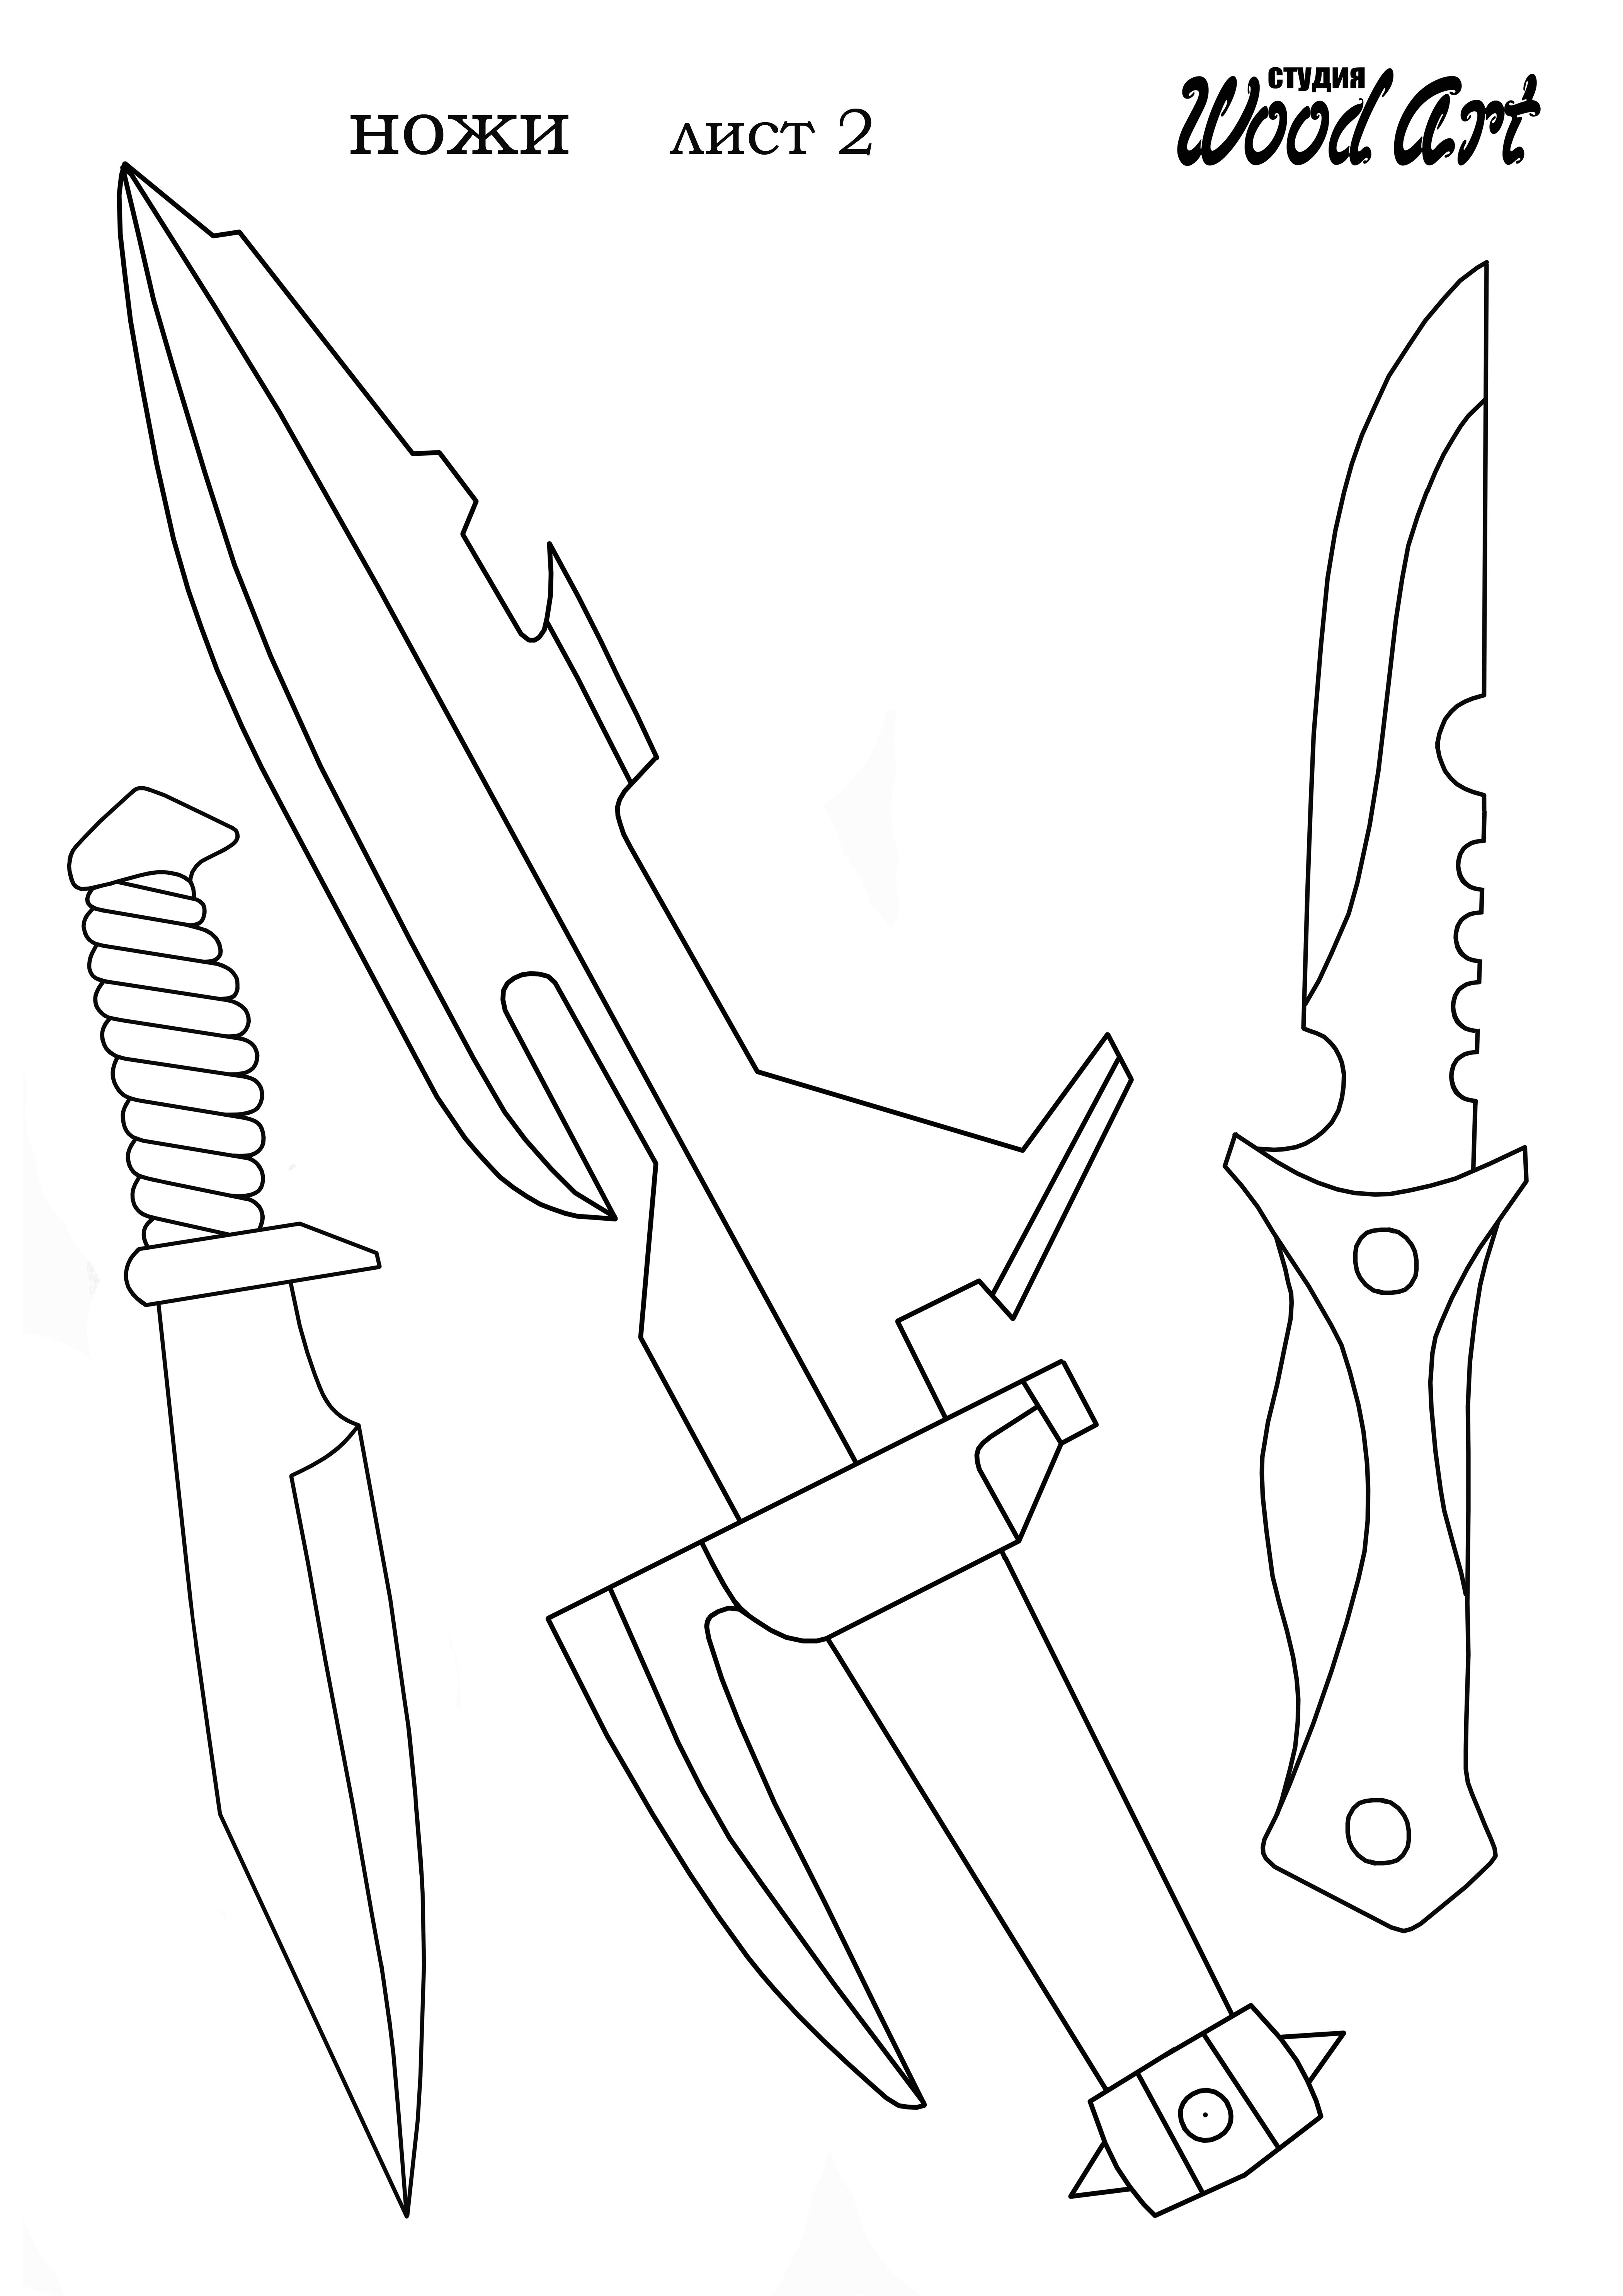 Ножи из CS: GO (КС ГО) — чертежи